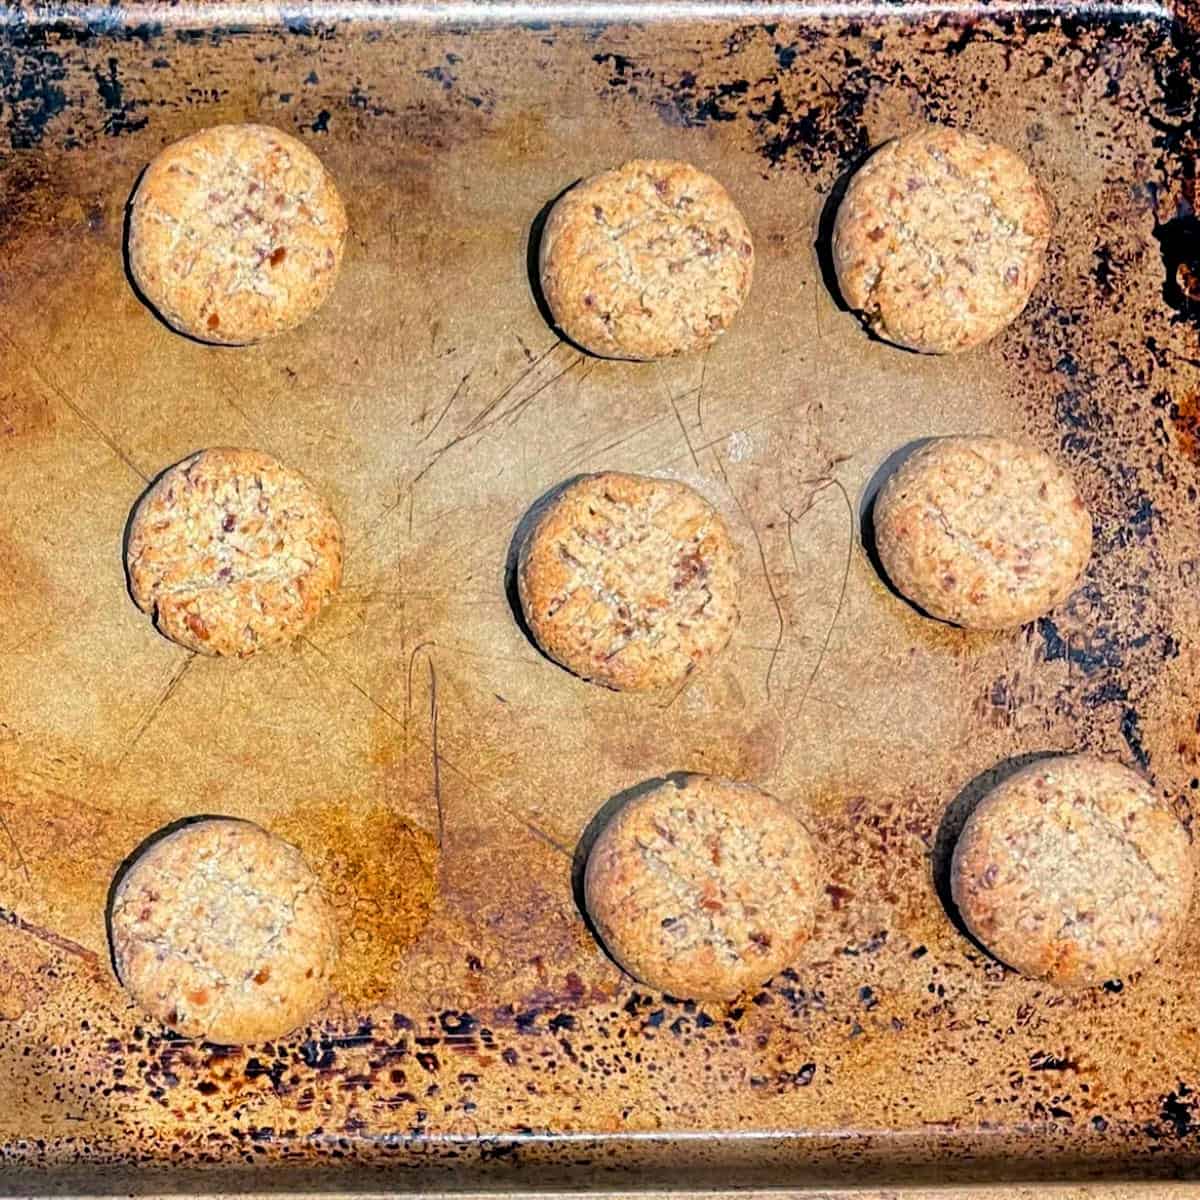 Baked almond flour cookies on baking sheet.